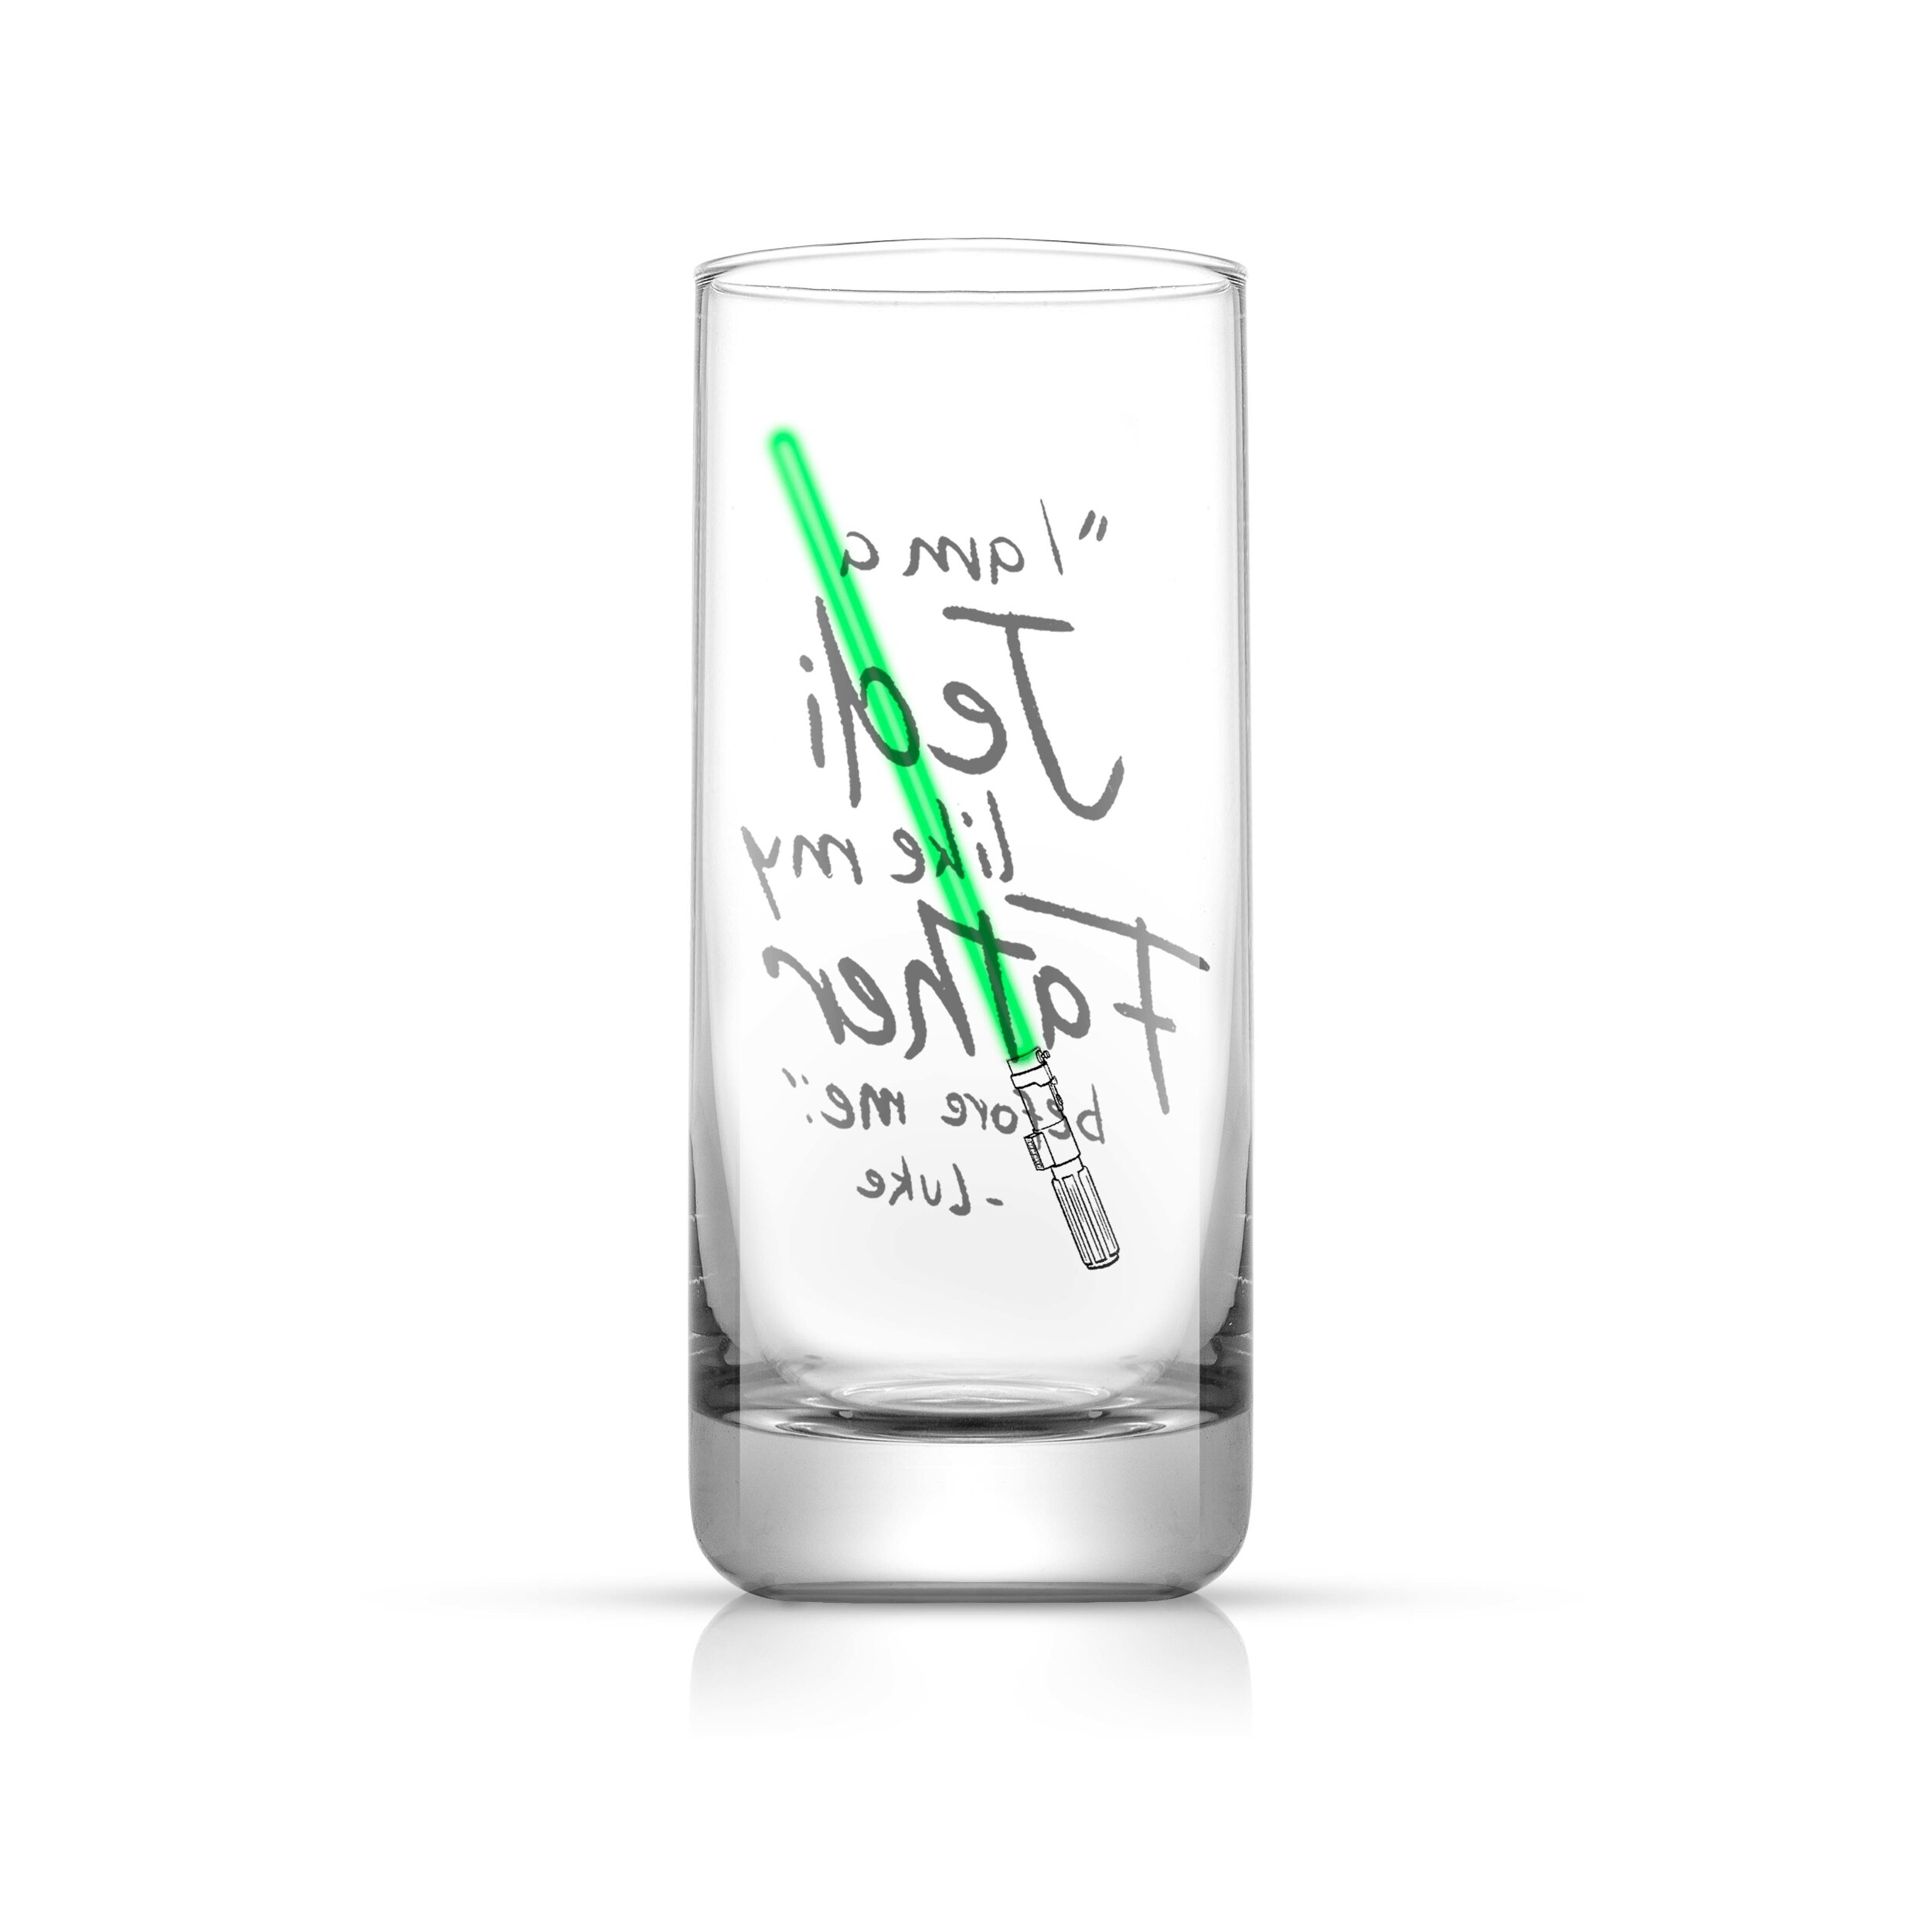 NEW IN BOX Star Wars Obi Wan Kenobi 2 Drinking Glasses 10oz JoyJolt Novelty